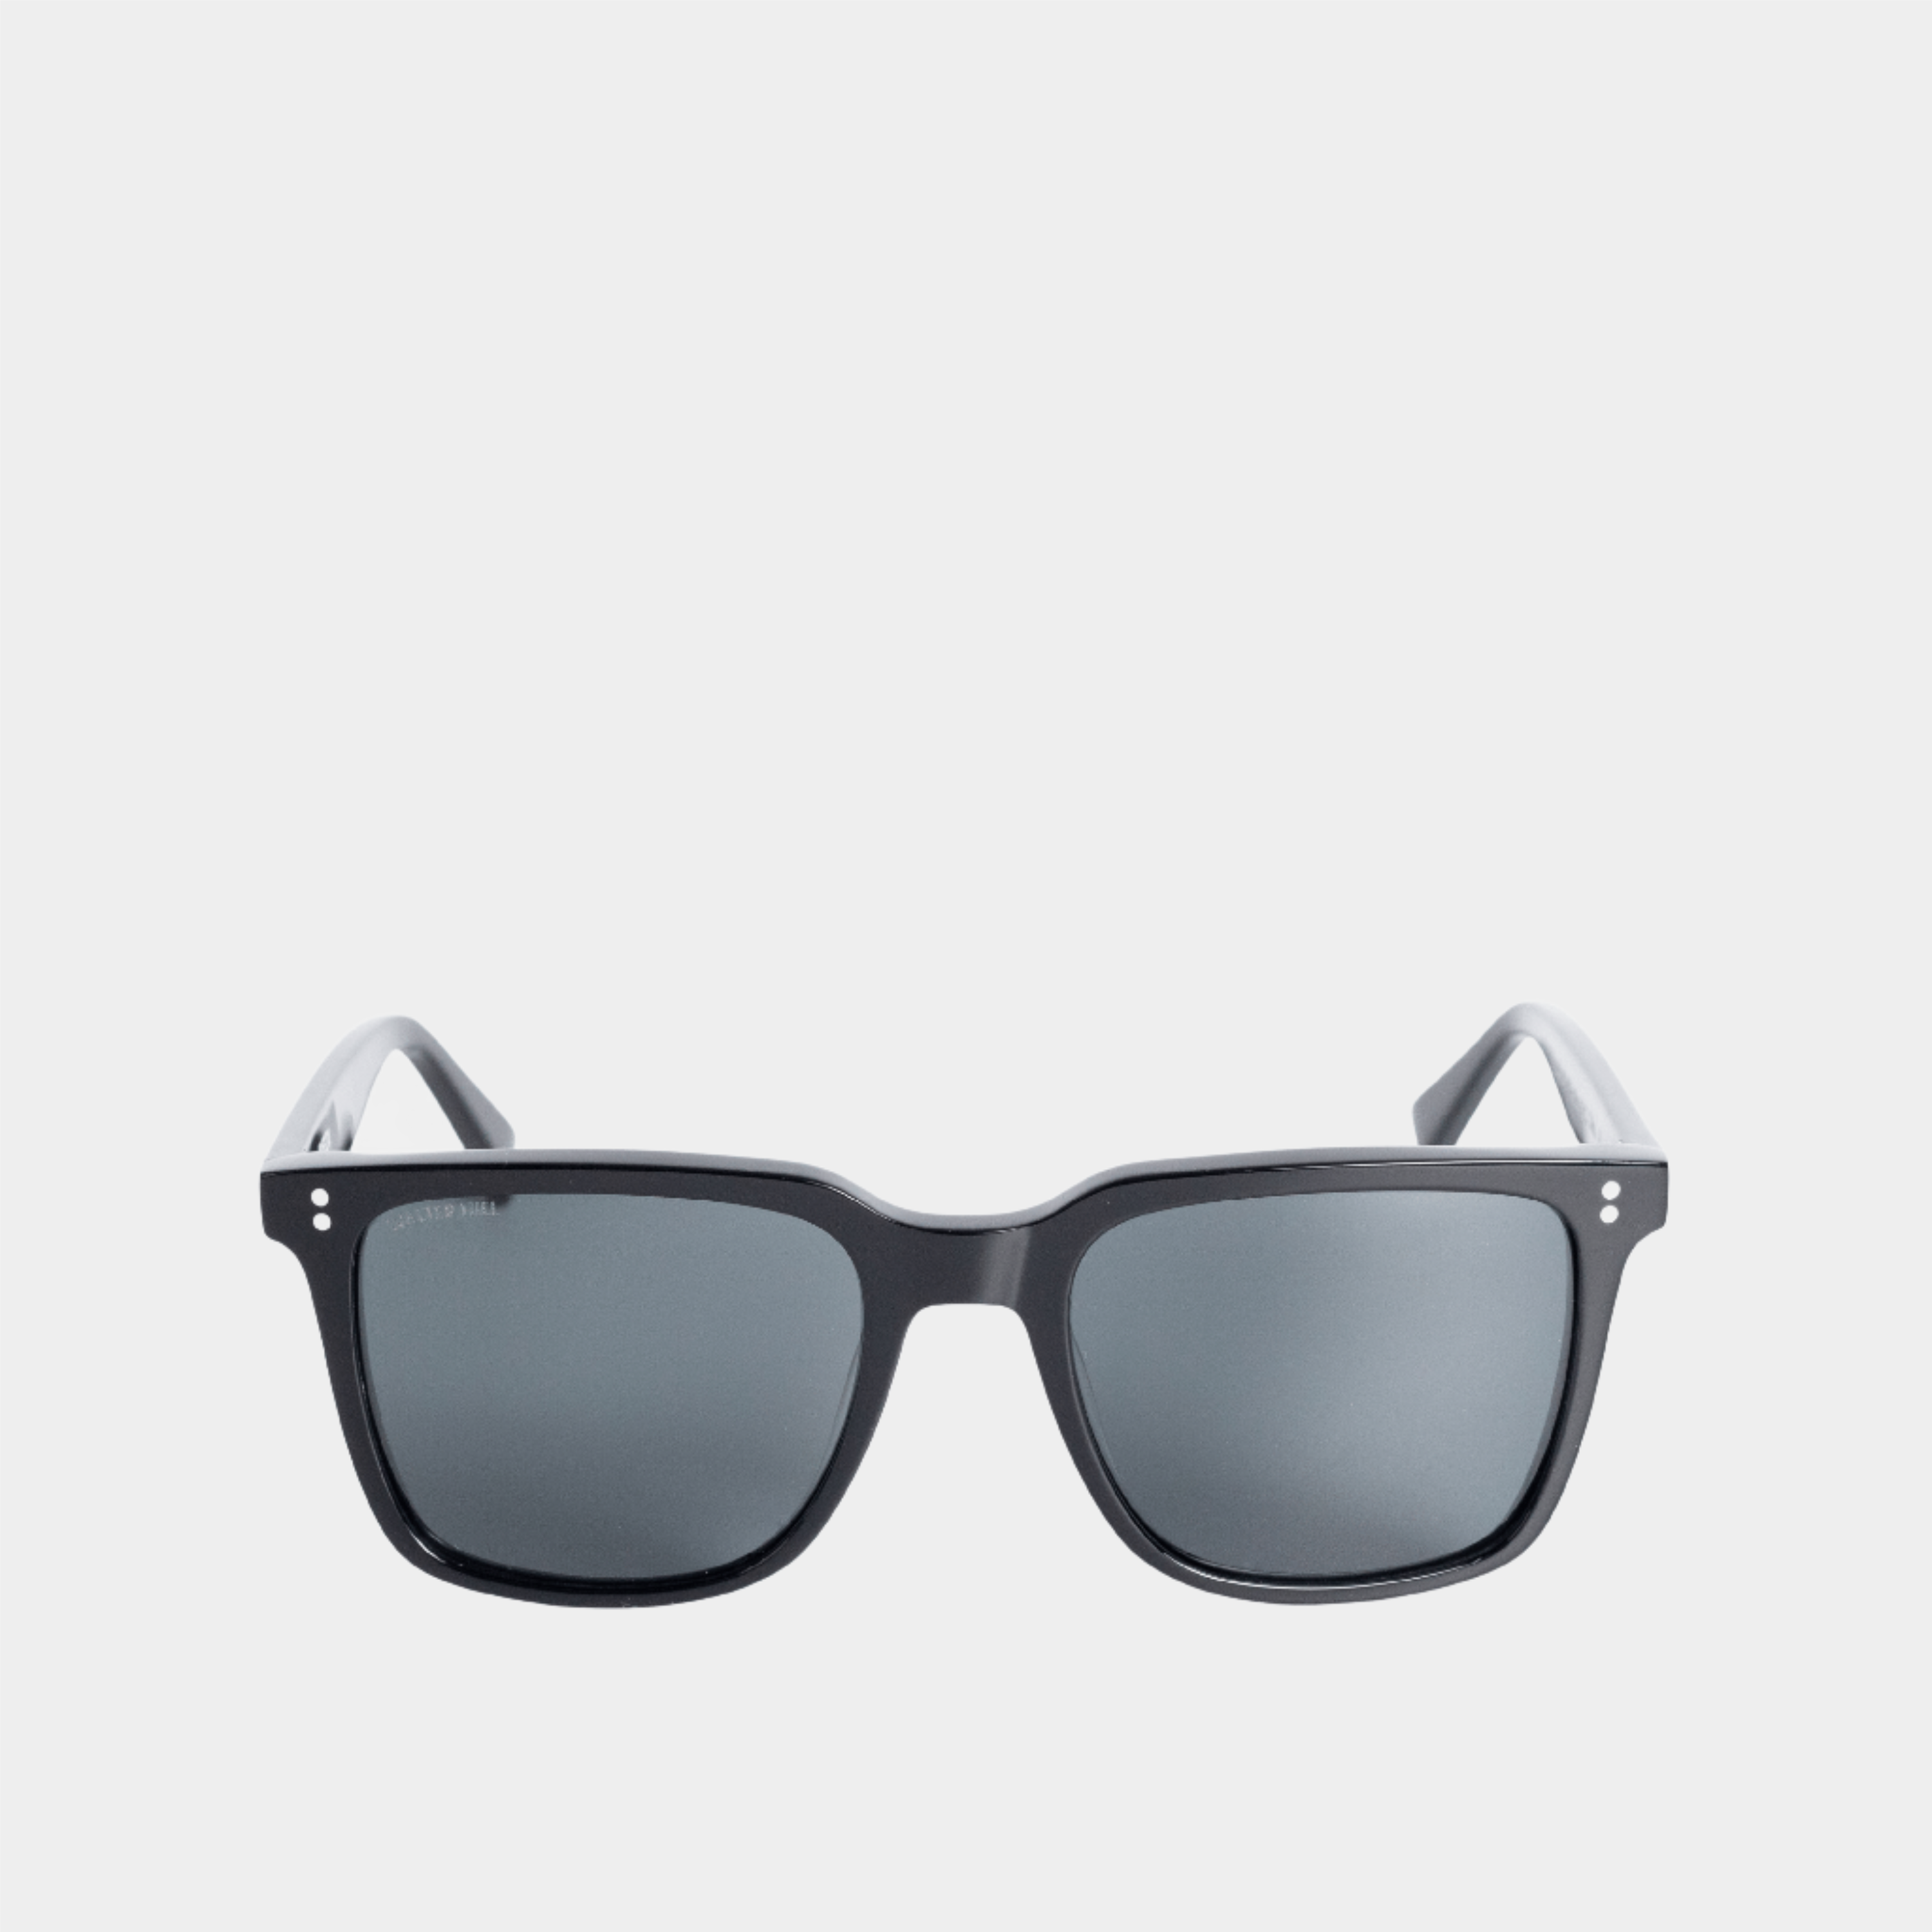 Walter Hill Sunglasses Black / Standard / Polarized Cat.3 MARSON - Black